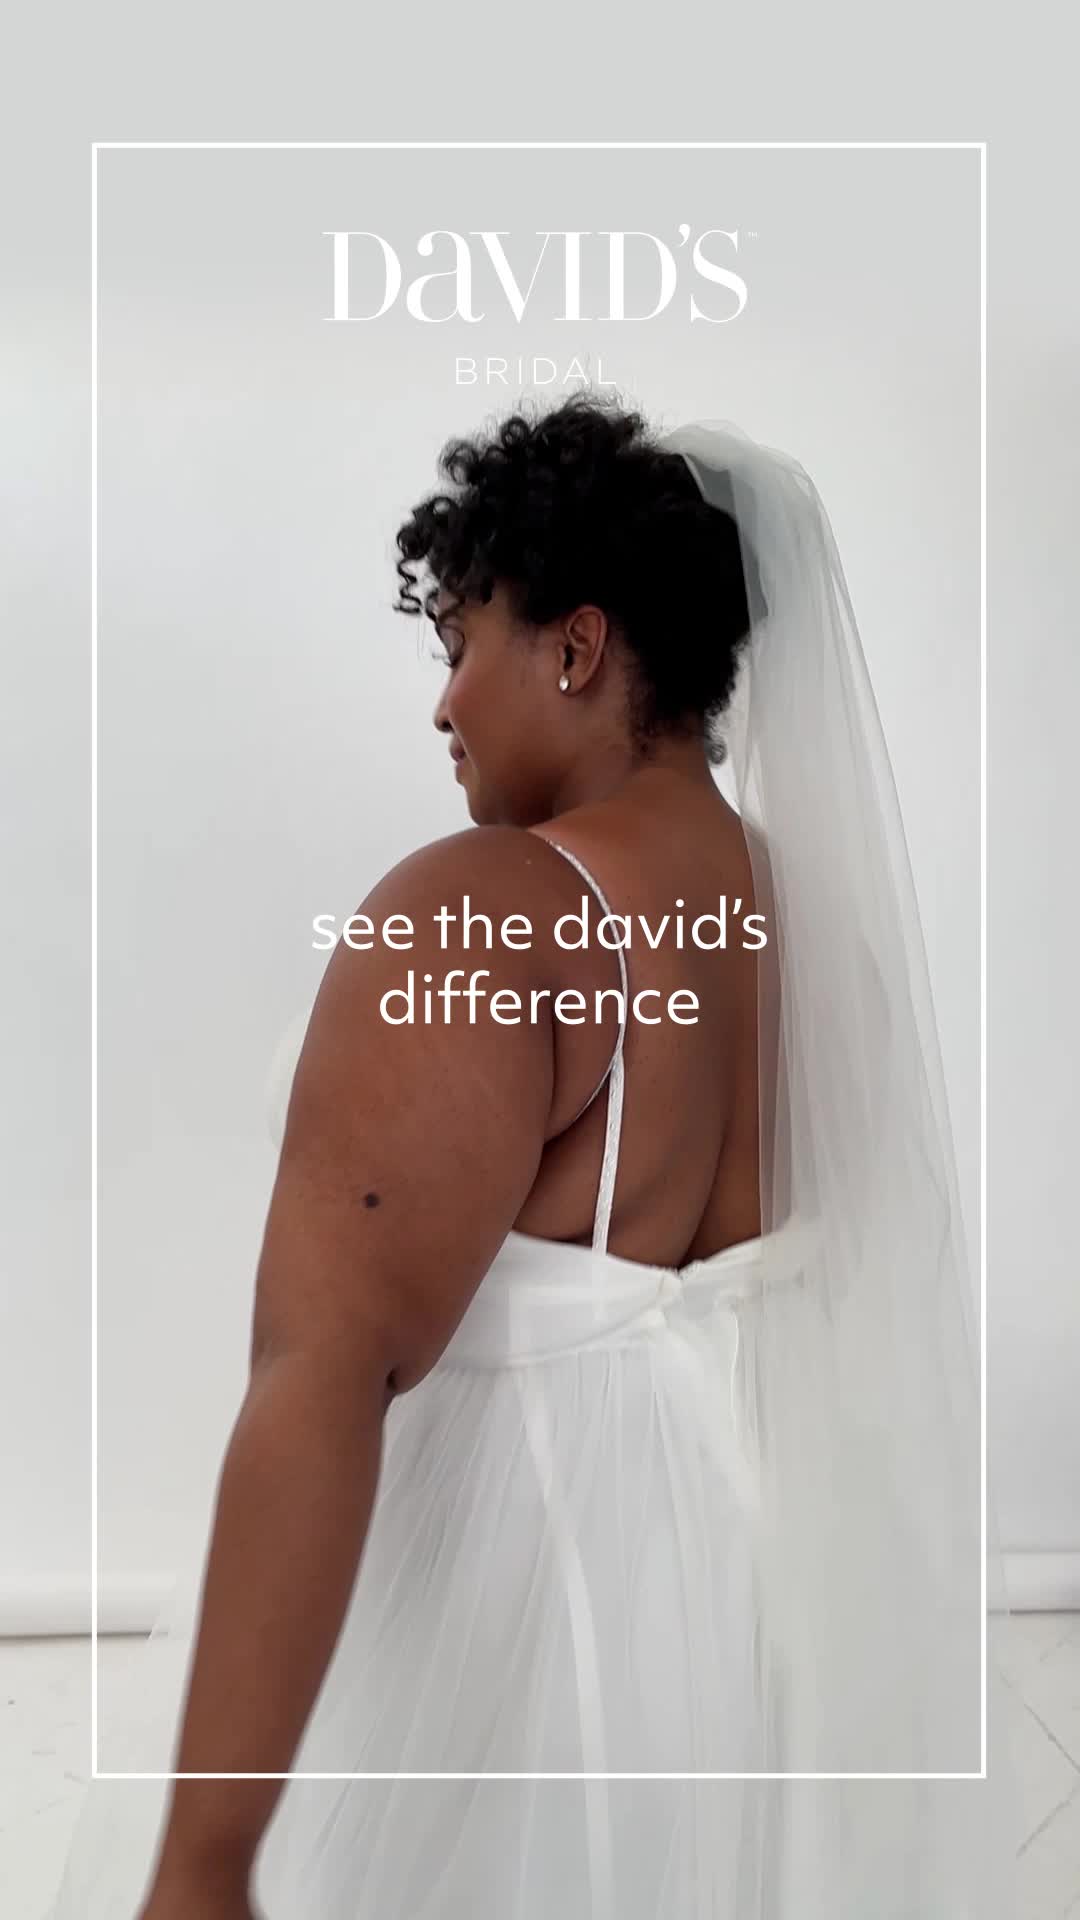 David's Bridal / Bridal - The New Luxury